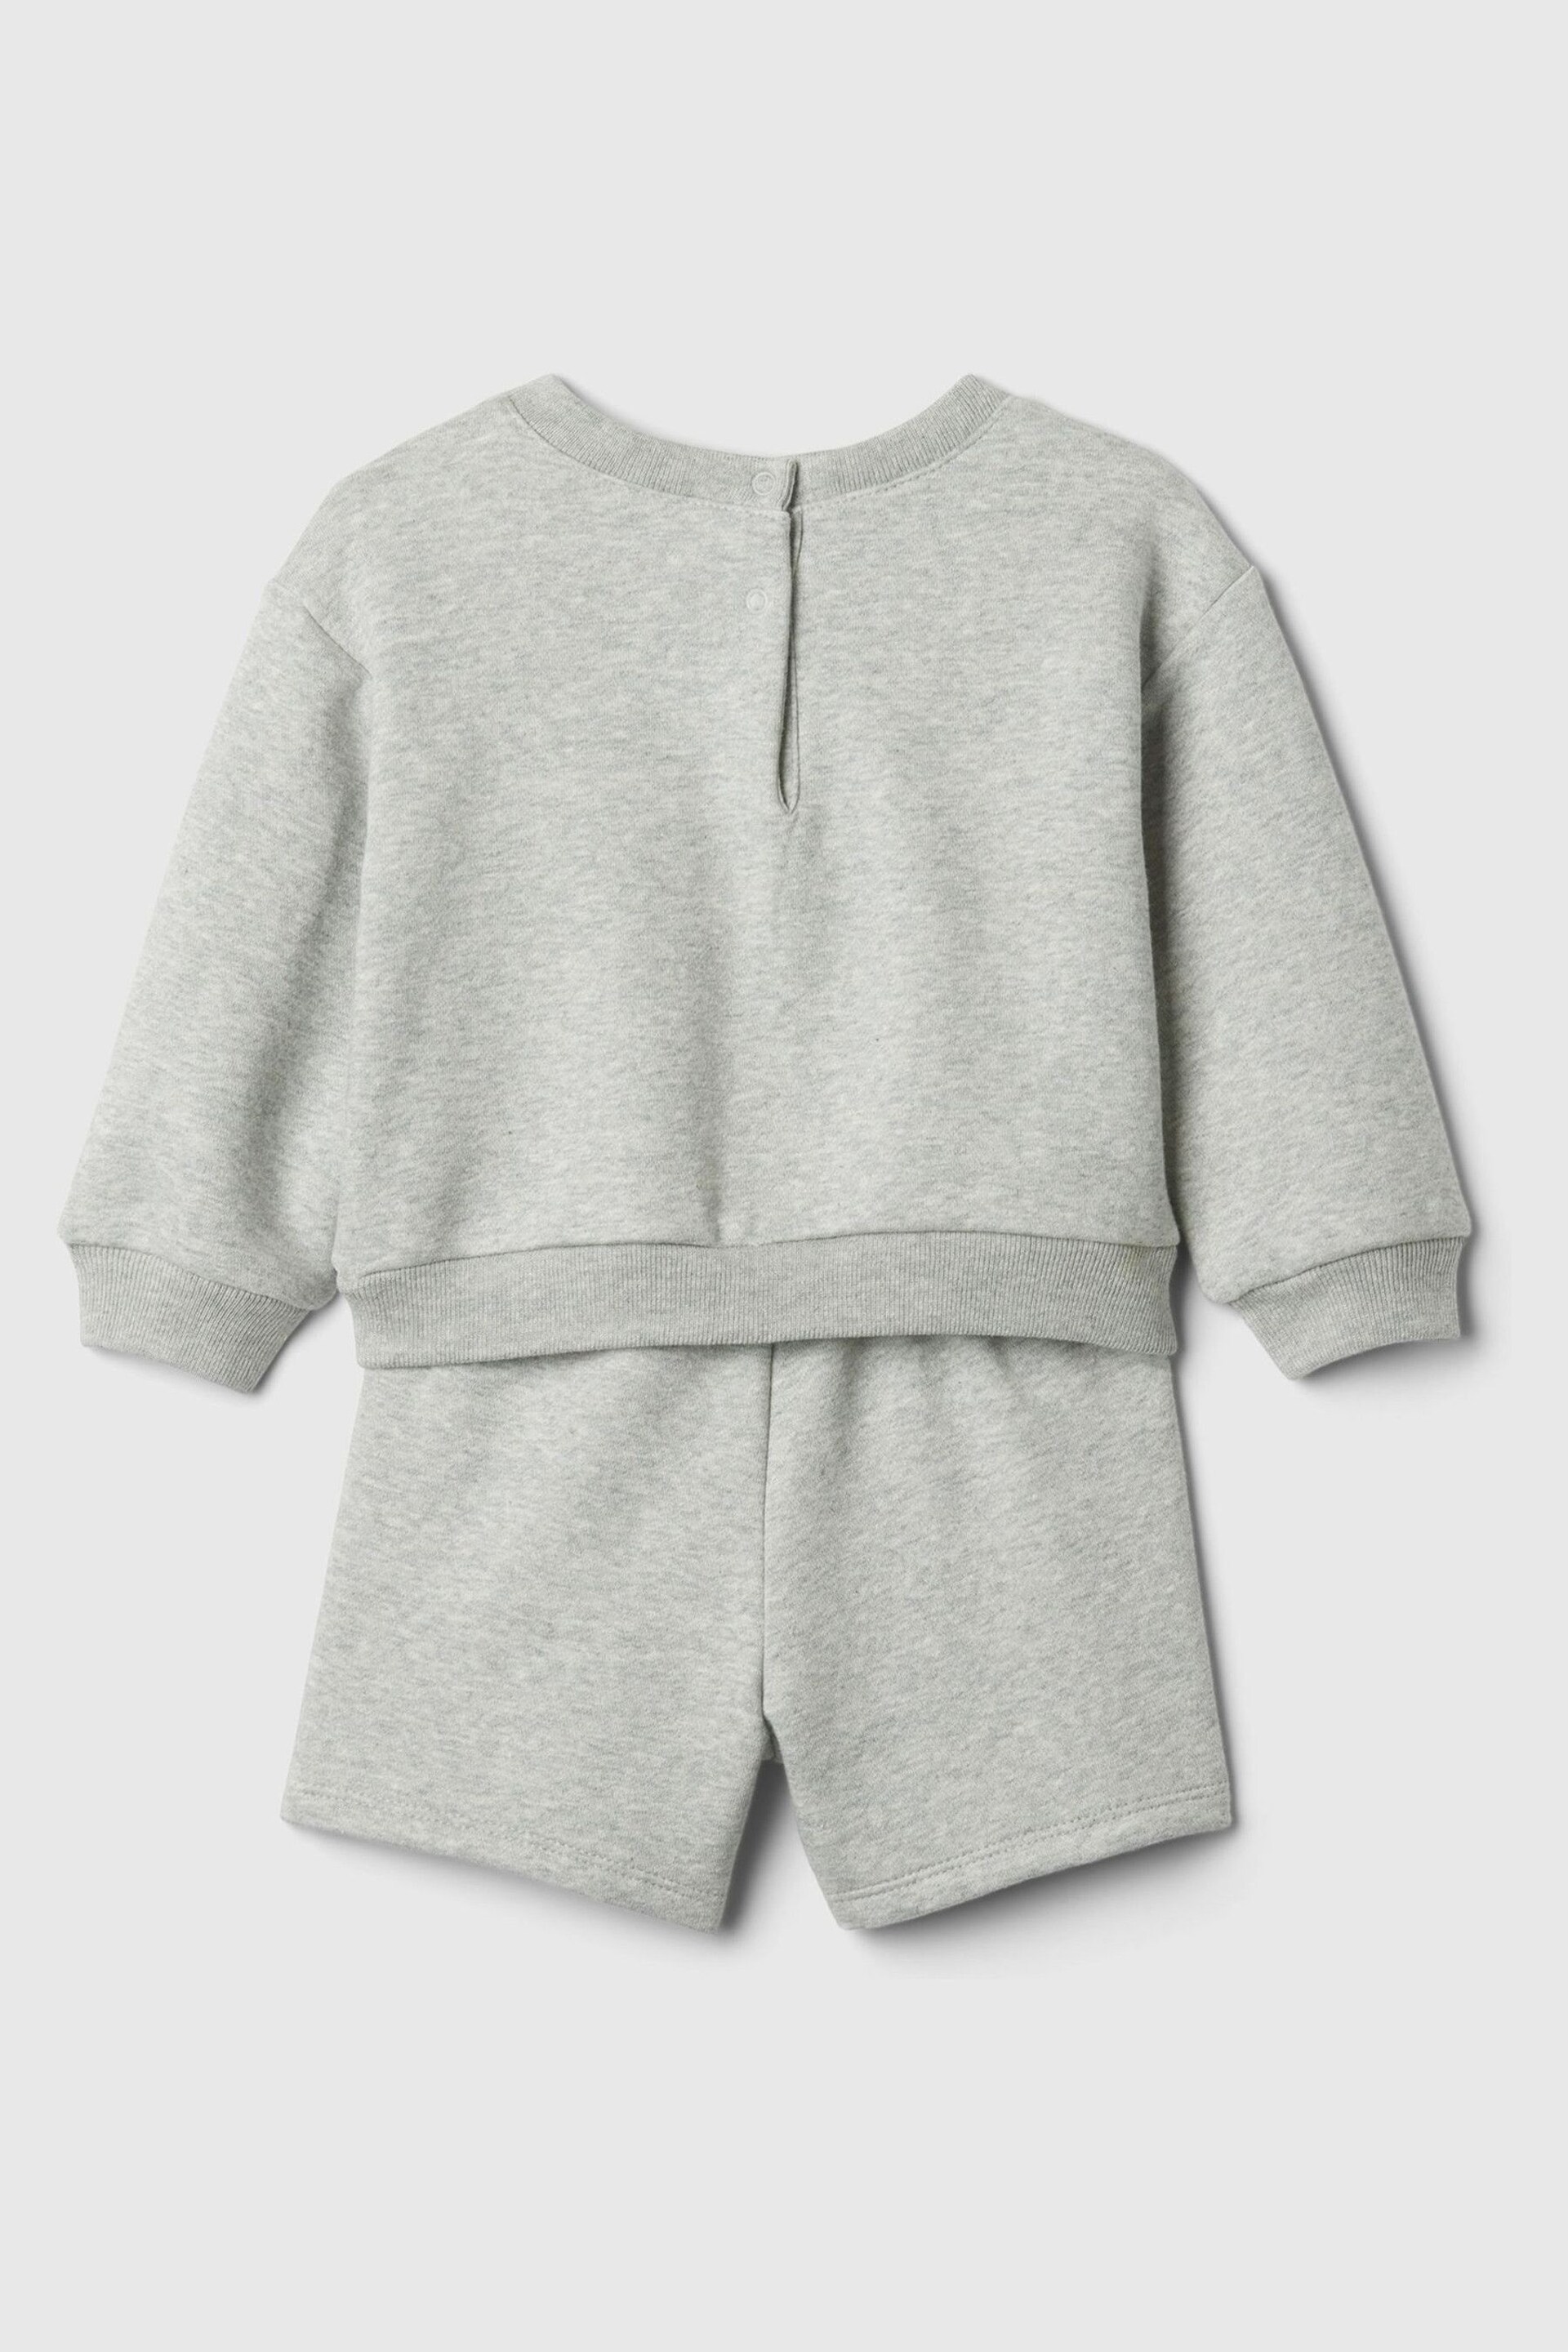 Gap Grey Graphic Baby Sweatshirt and Shorts Set (Newborn-24mths) - Image 2 of 2